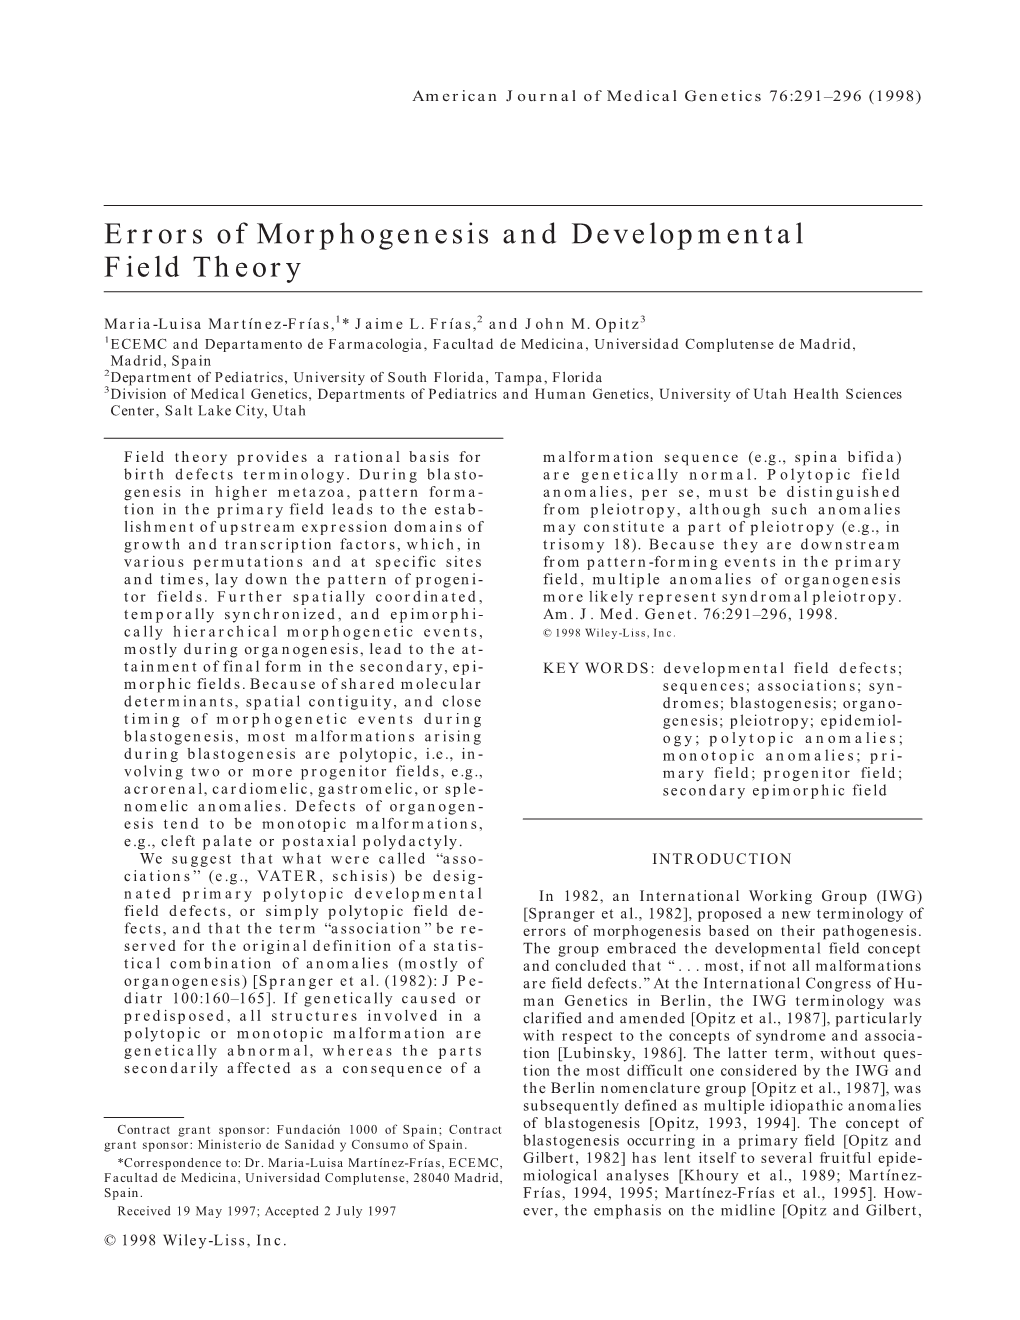 Errors of Morphogenesis and Developmental Field Theory